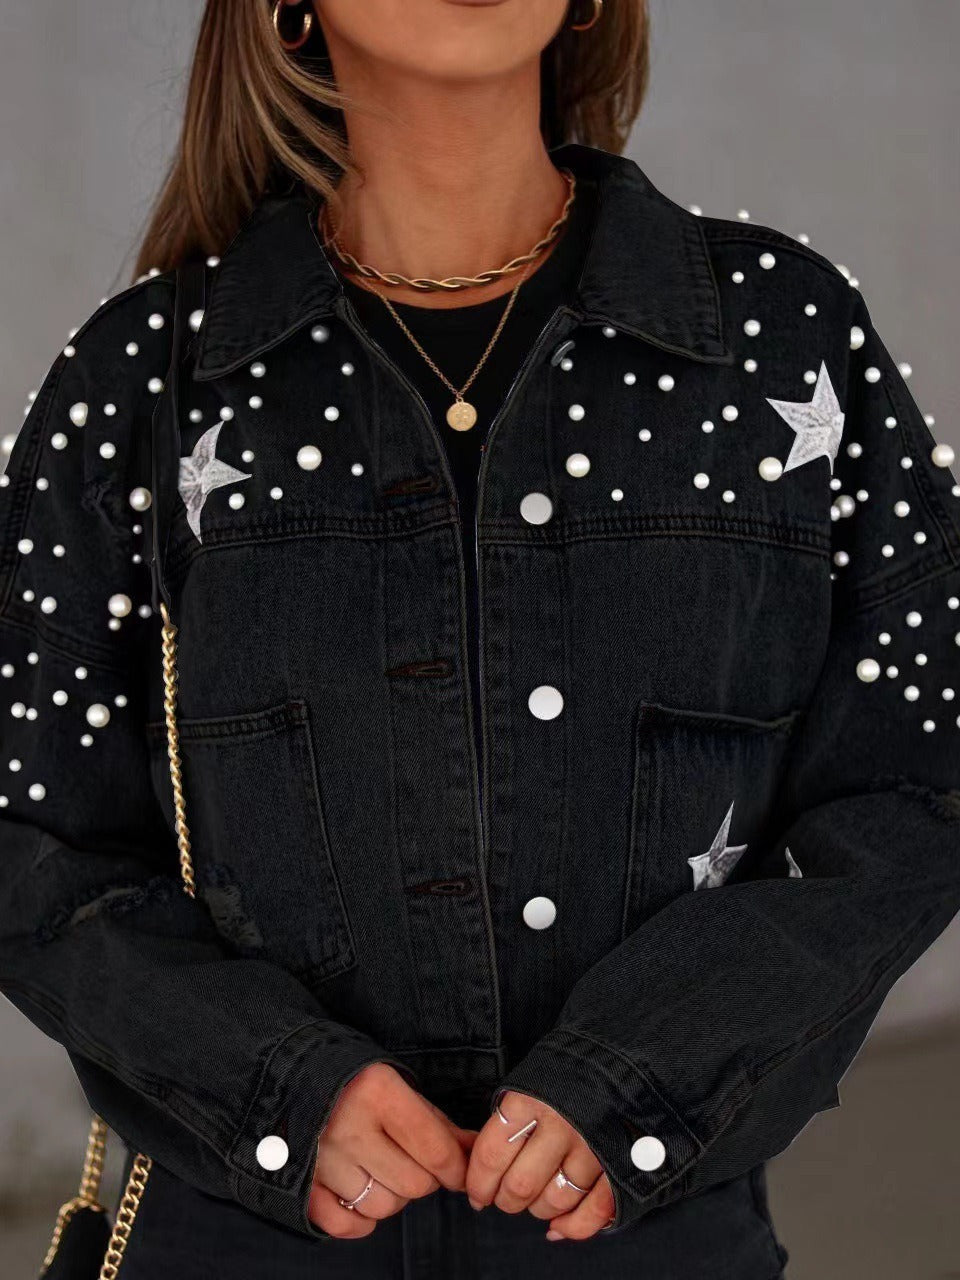 European And American Heavy Industry Beads Women's Loose Denim Jacket